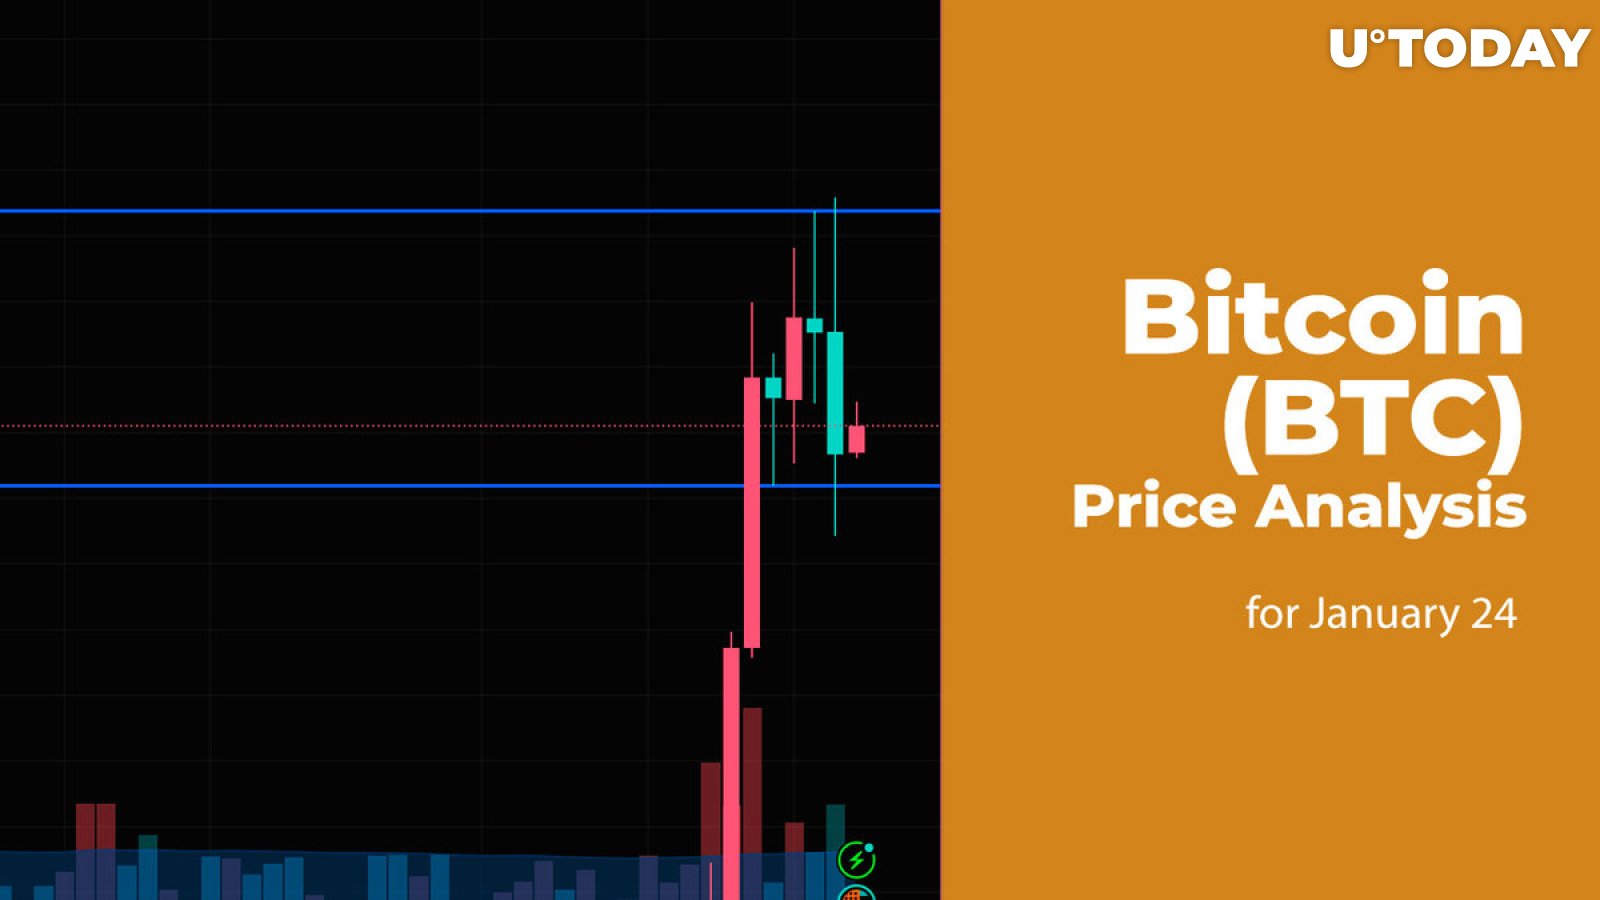 Bitcoin (BTC) Price Analysis for January 24